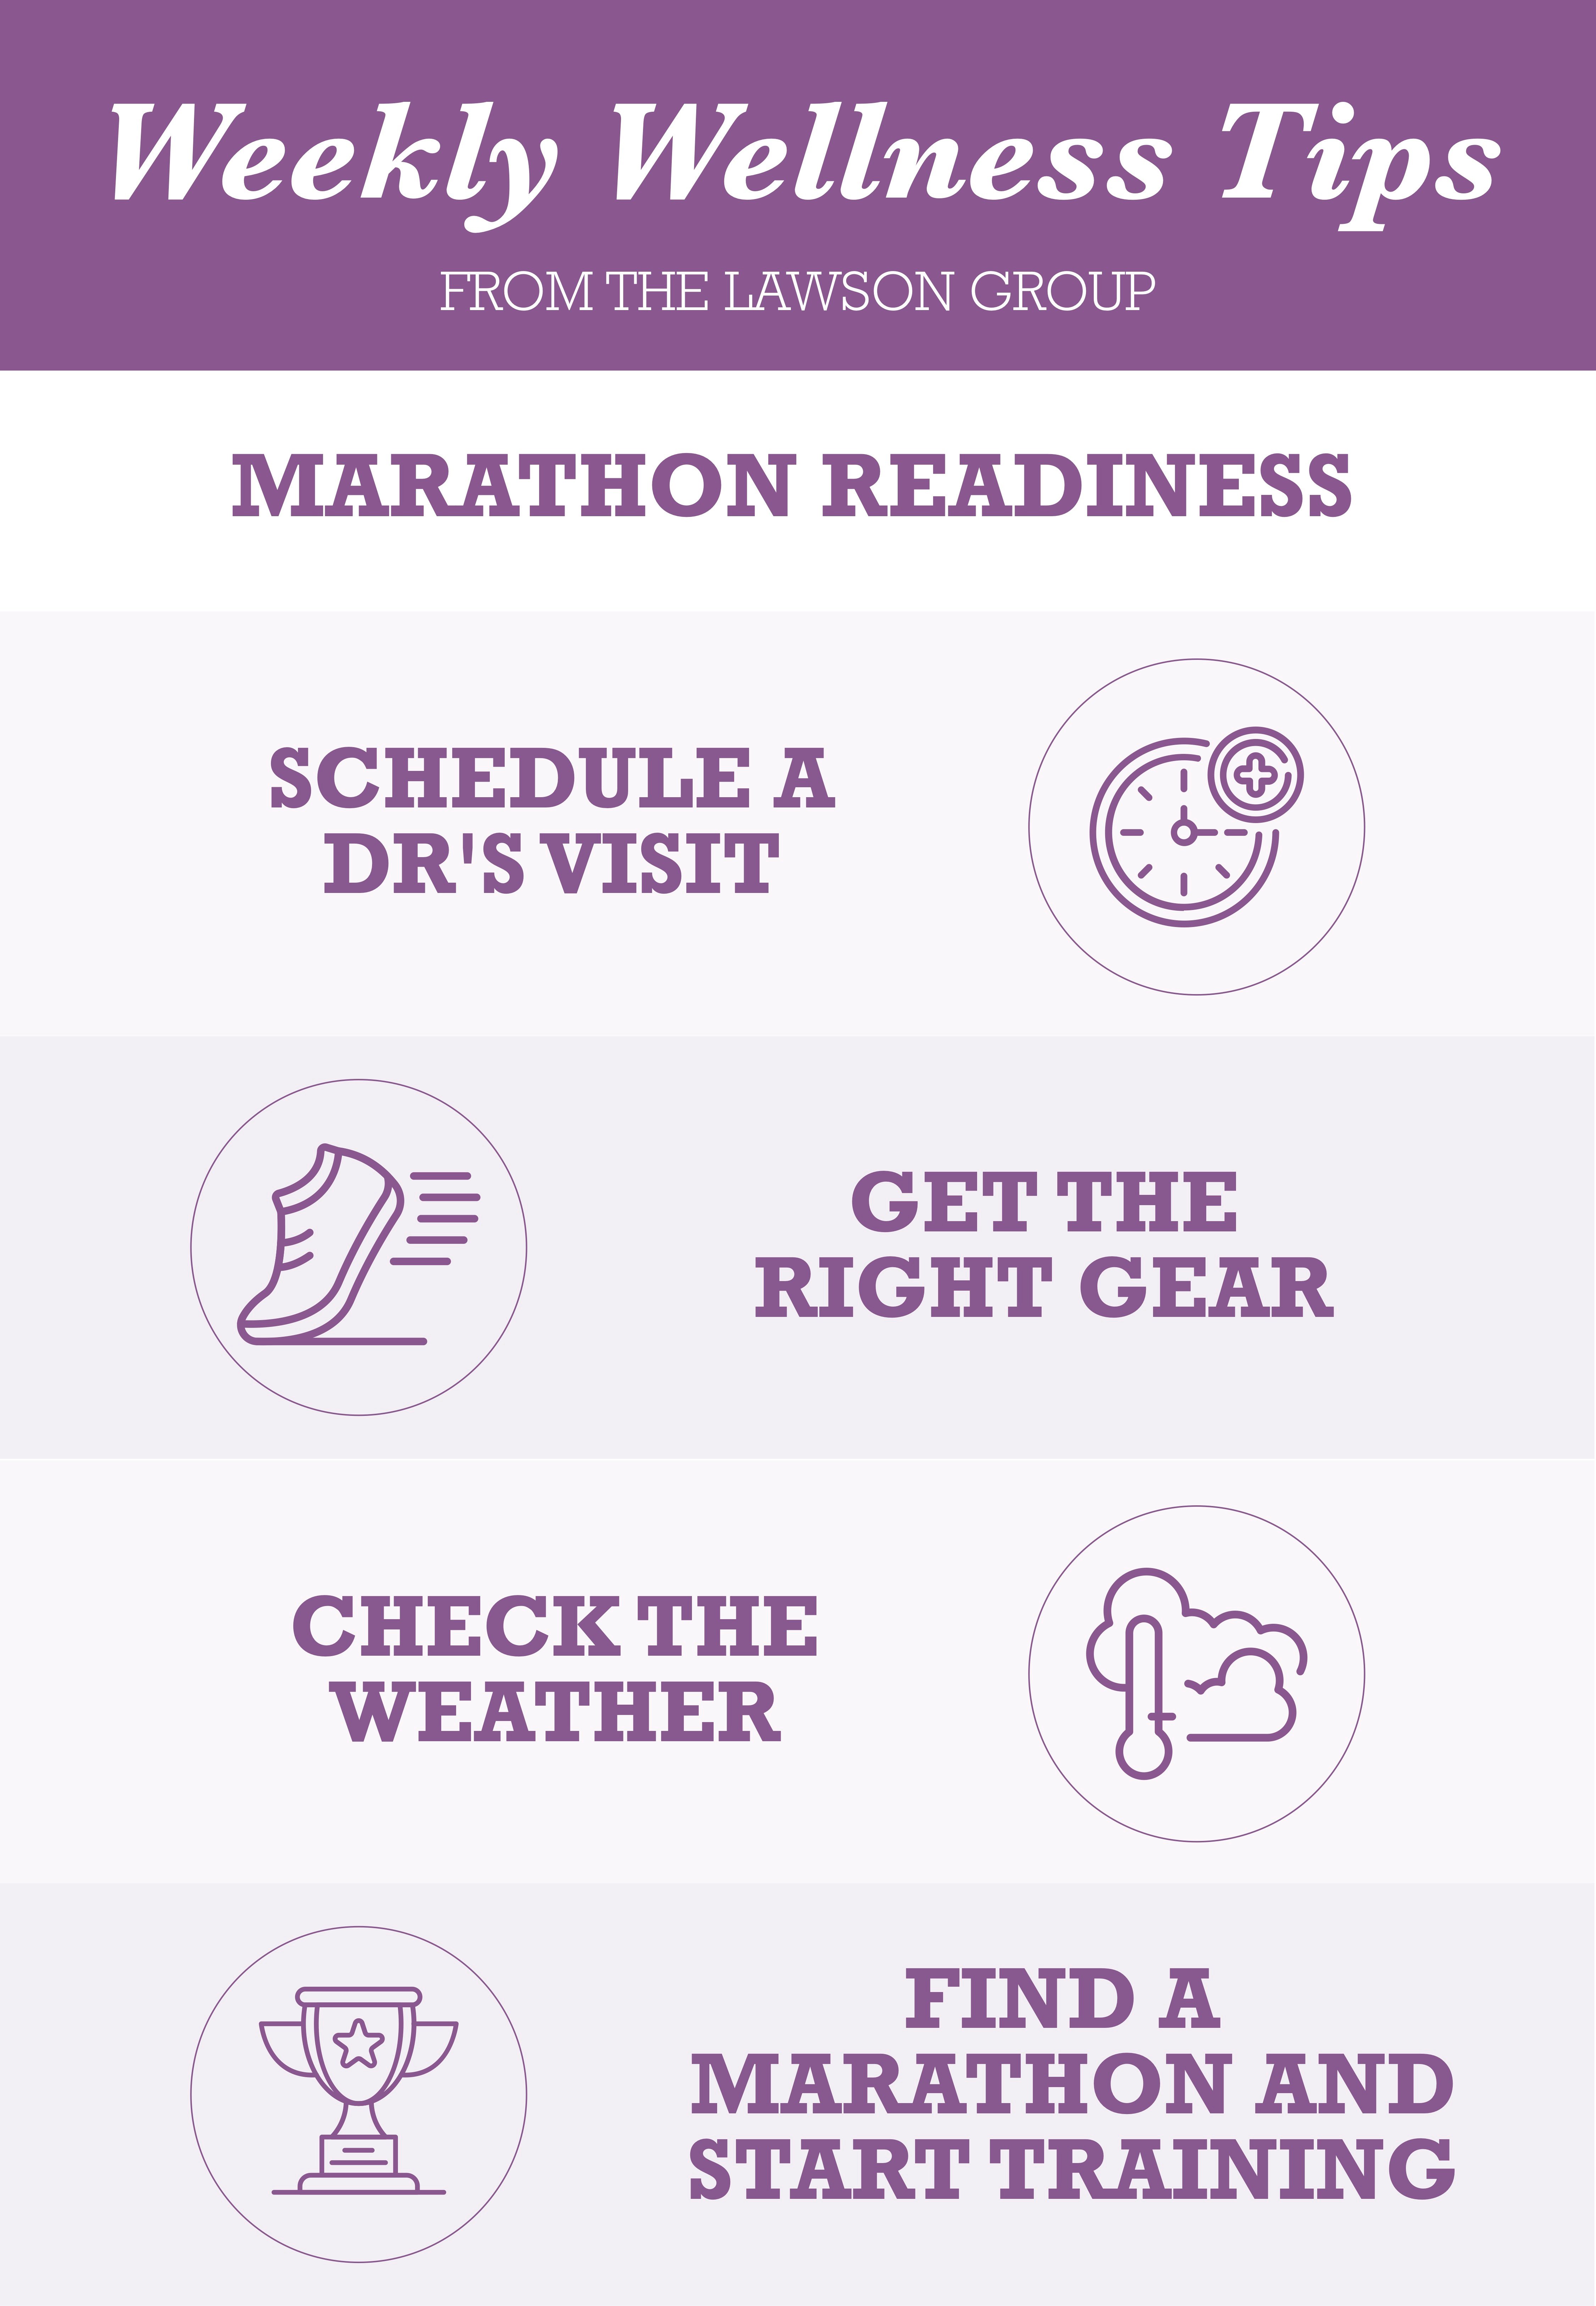 TLG22005 Wellness Tips  Marathon Readiness Infographic